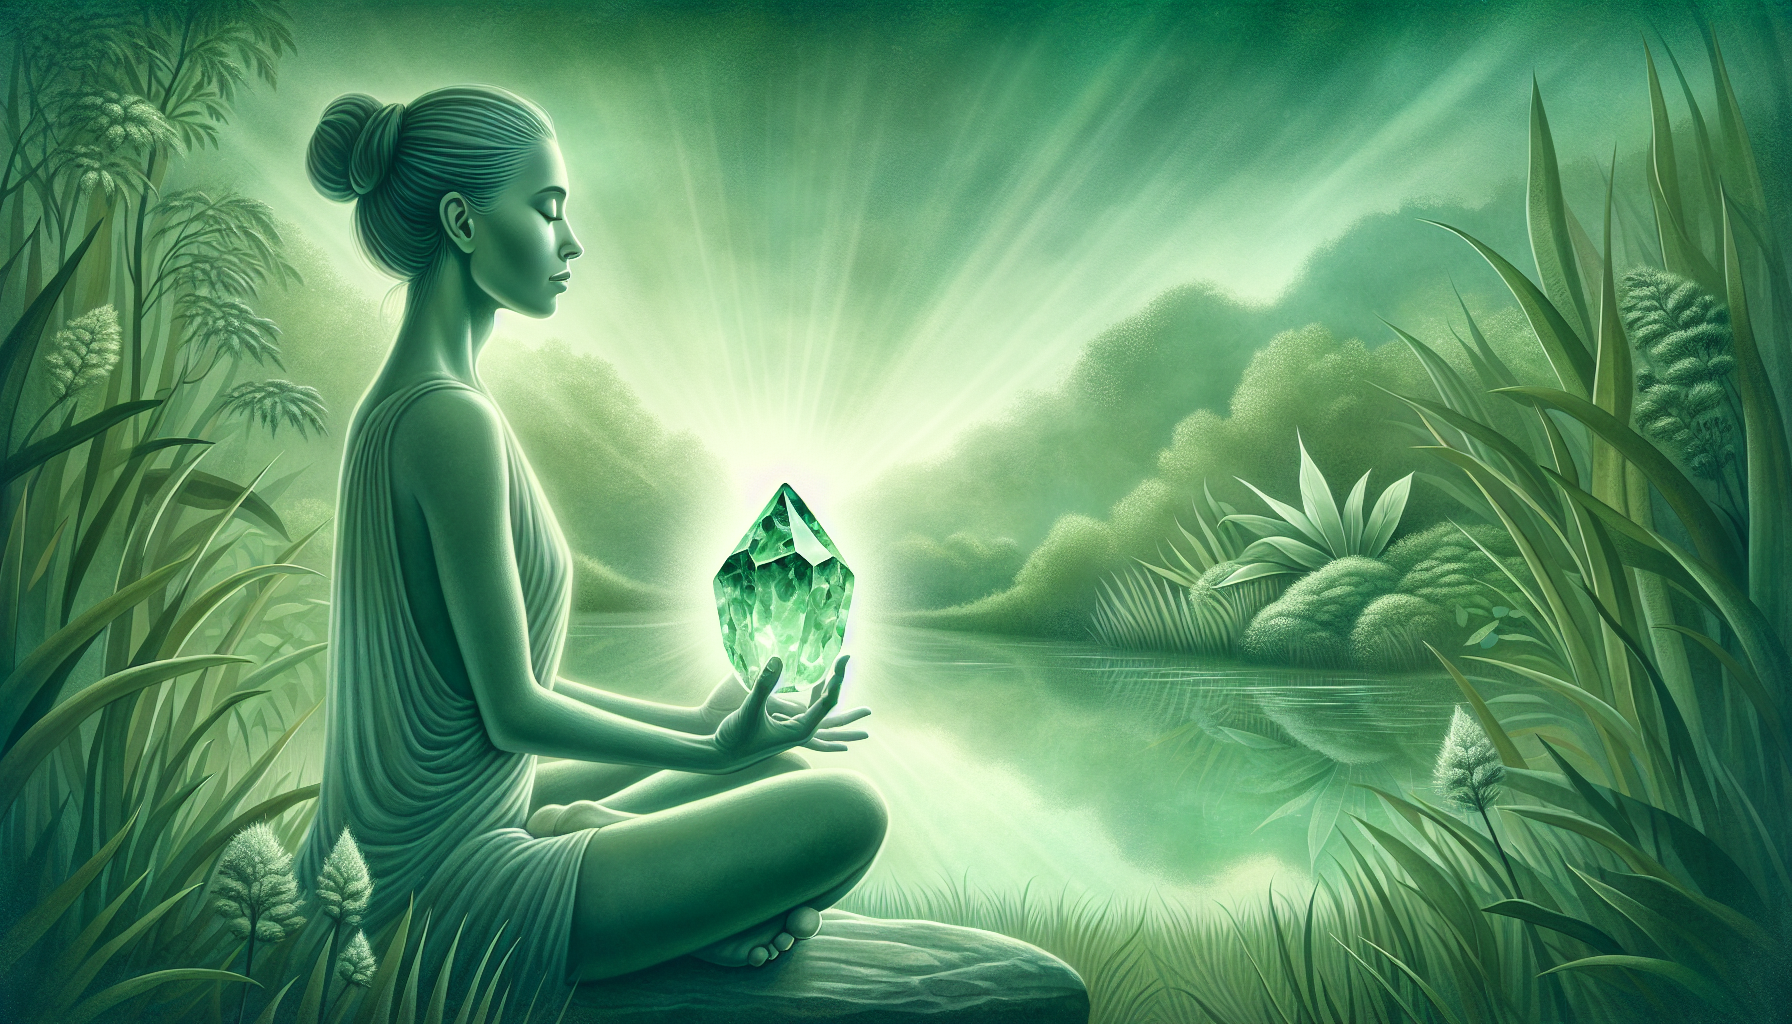 Illustration of a person meditating with moldavite